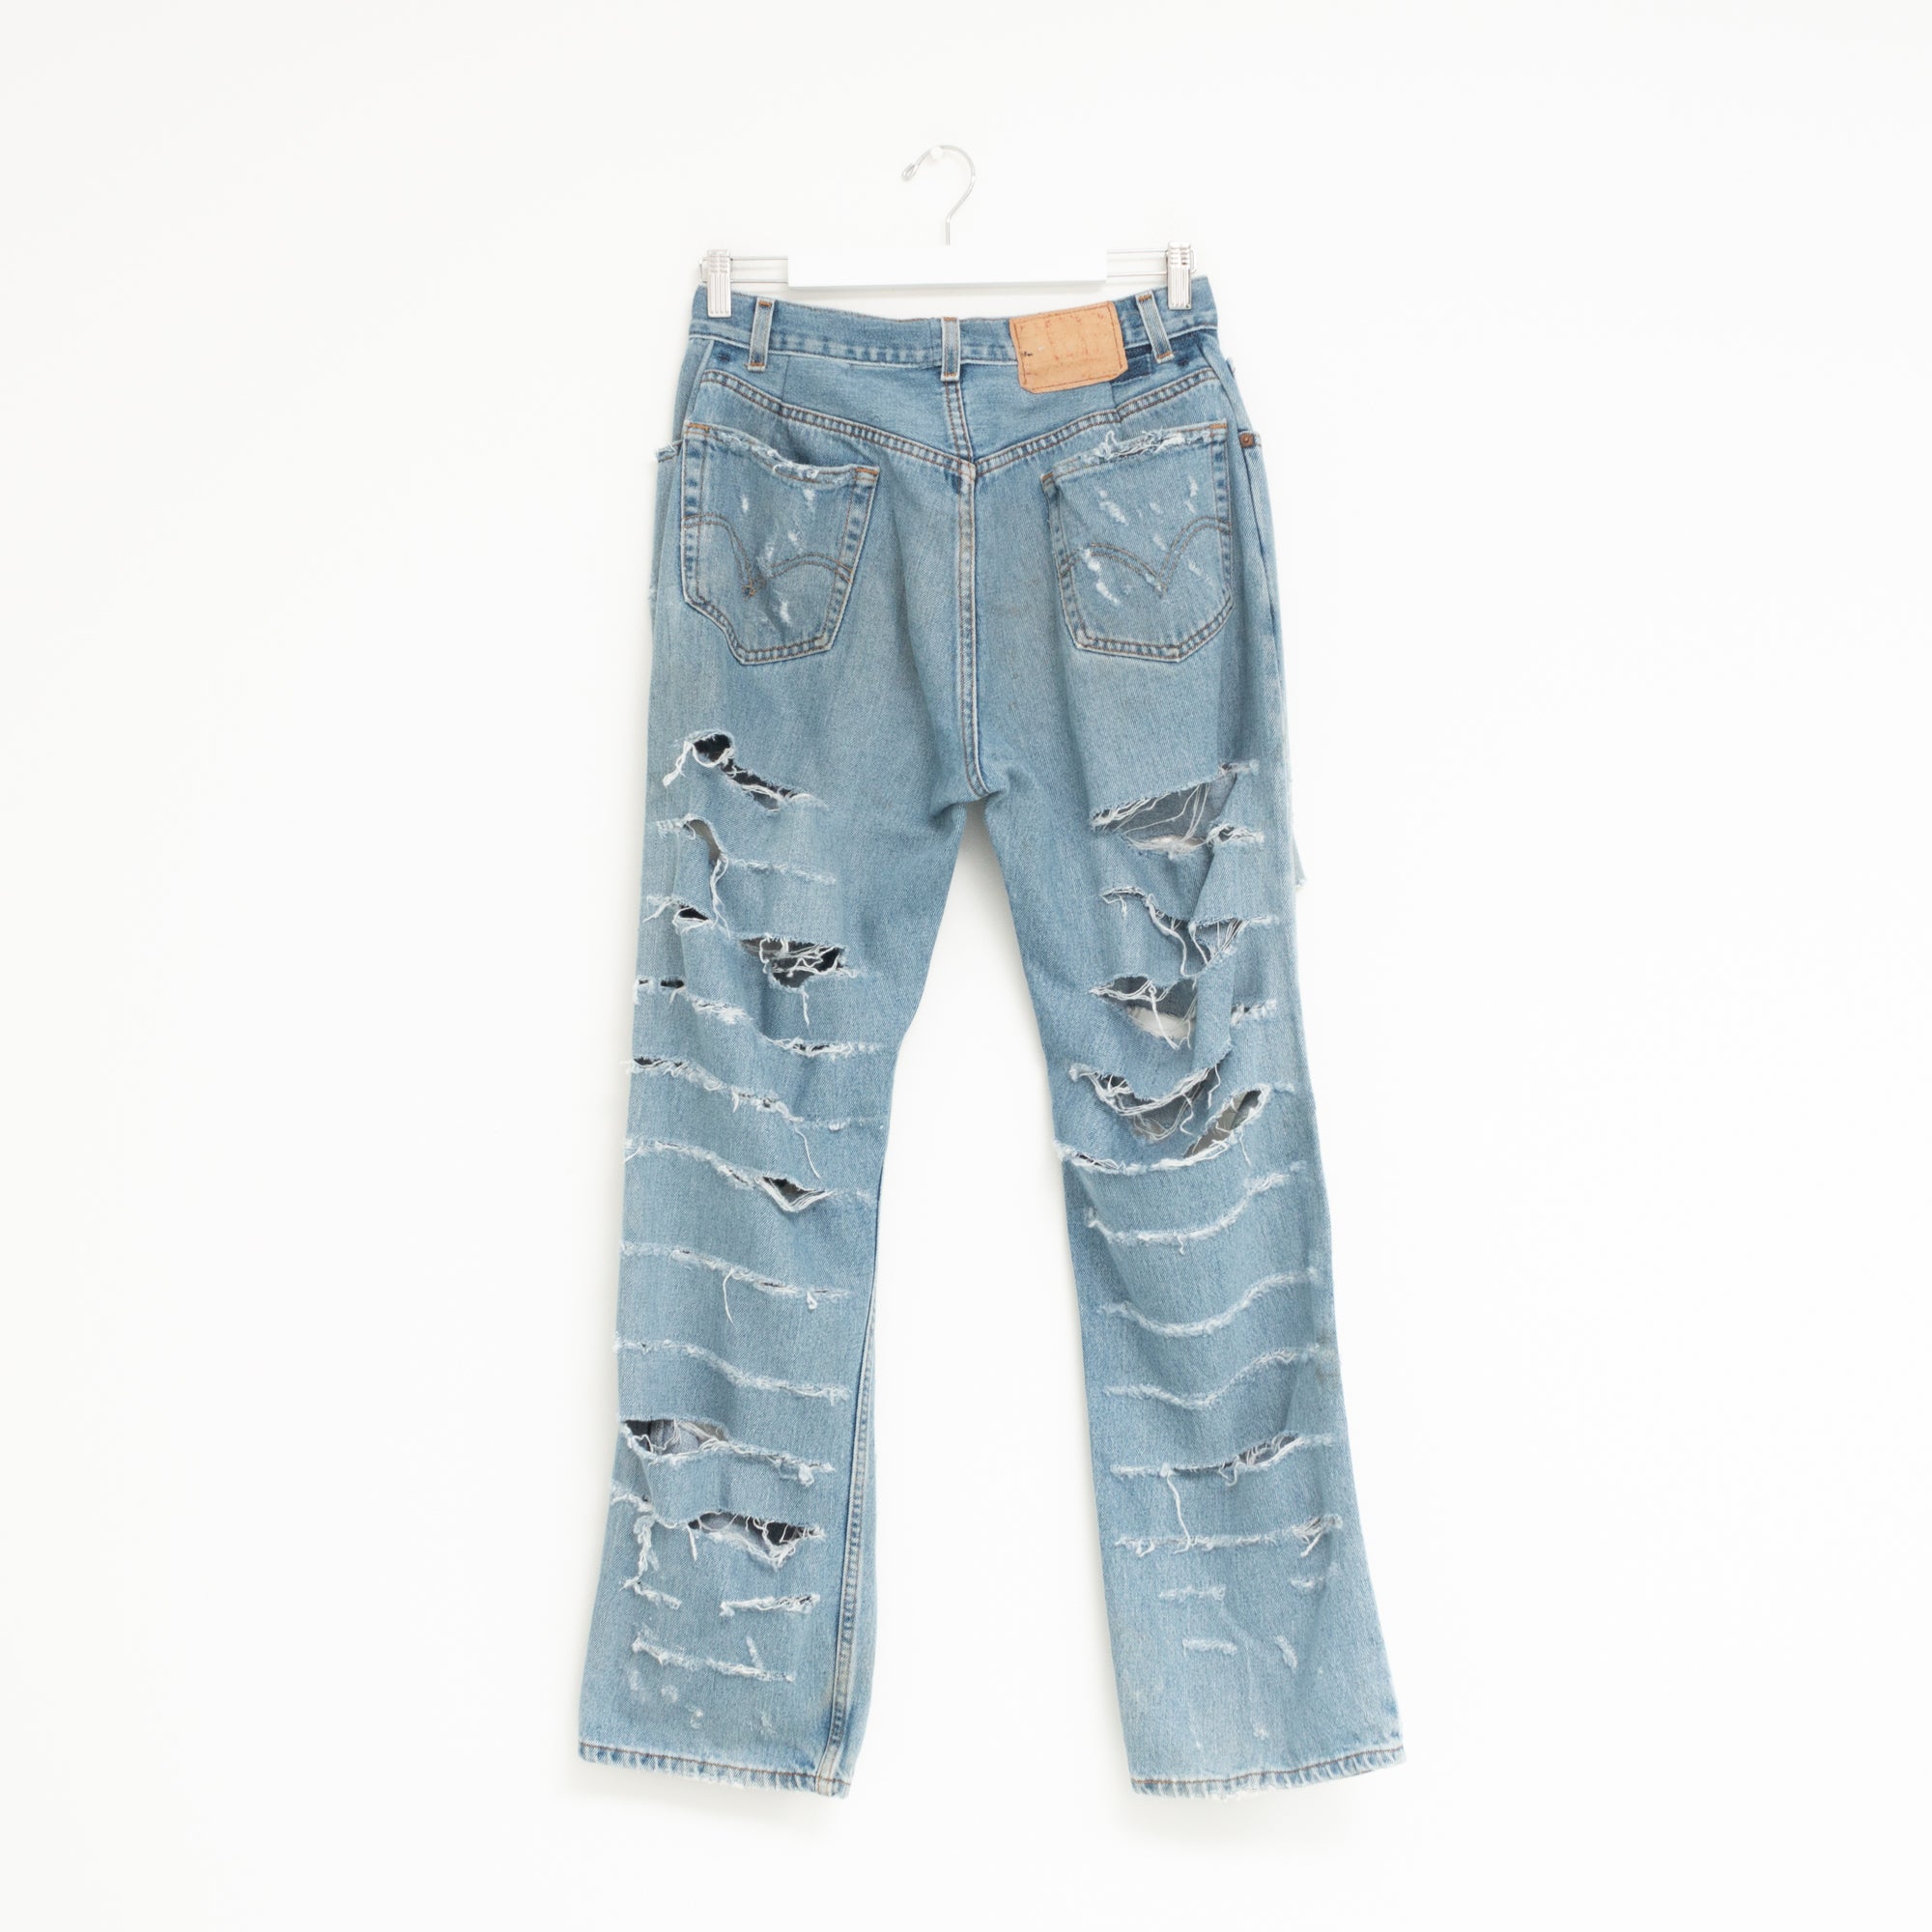 "THRASHER" Jeans W31 L31